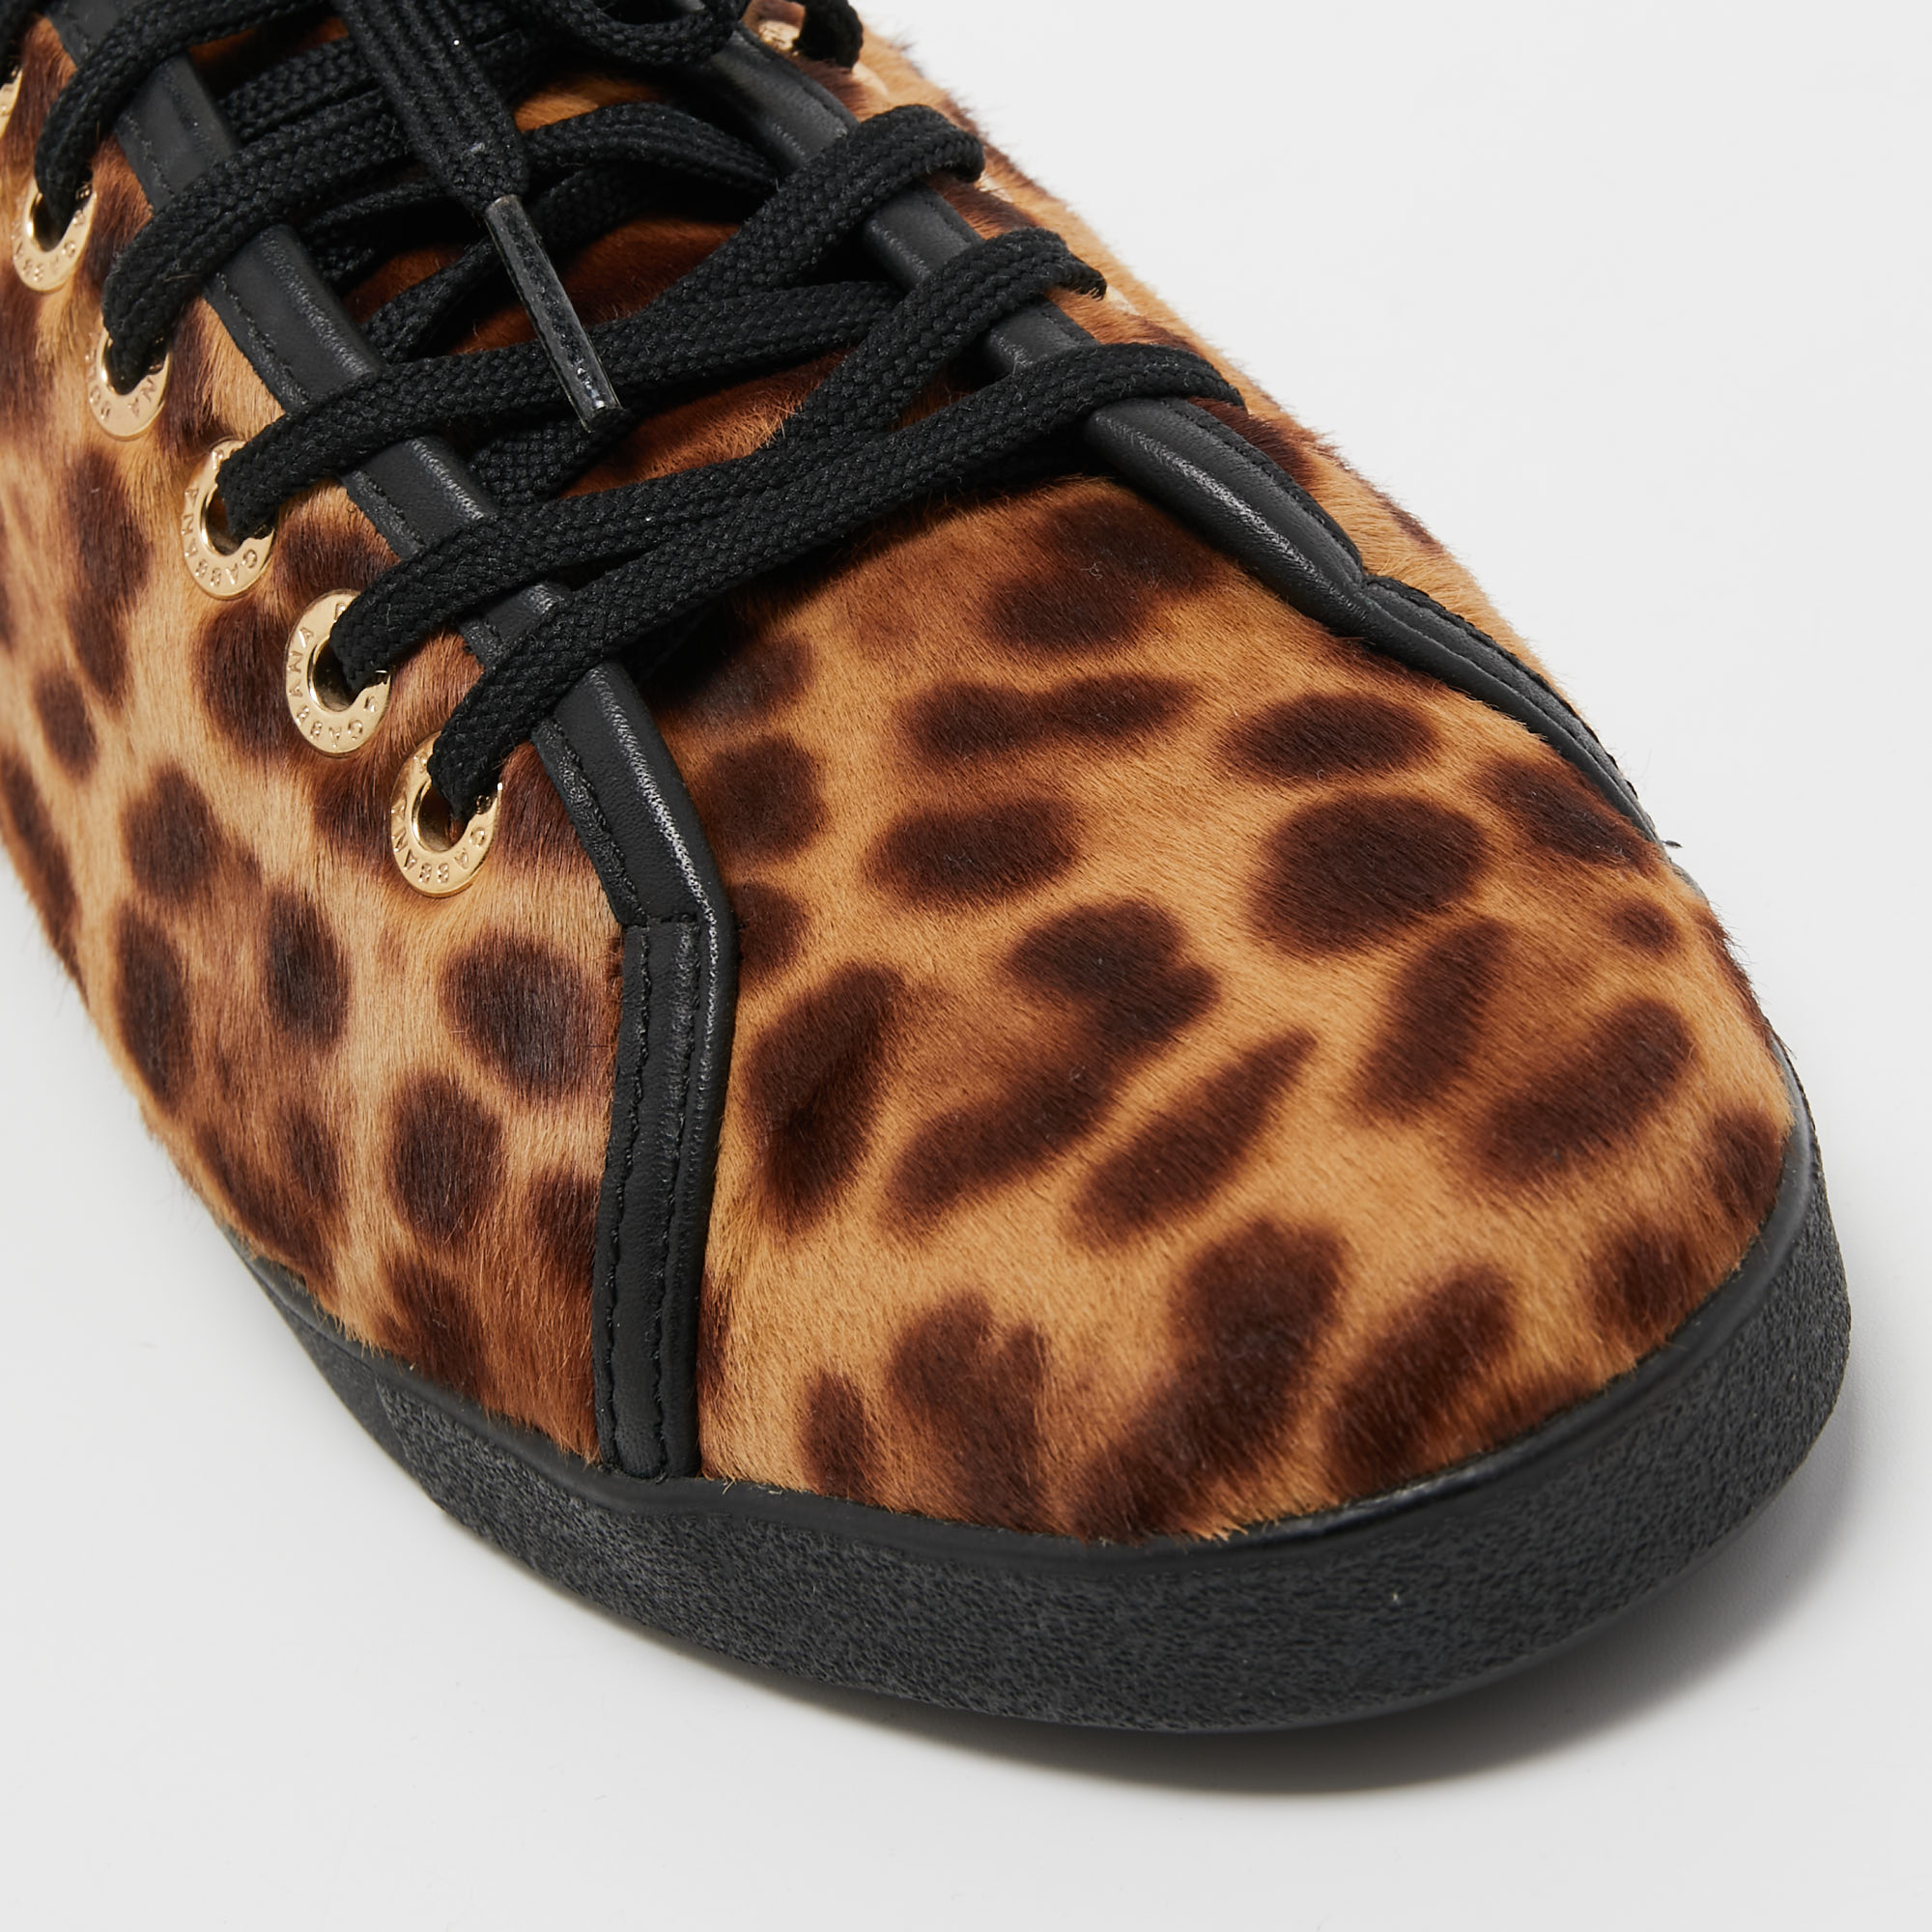 Dolce & Gabbana Brown Leopard Print Calf Hair Sneakers Size 41